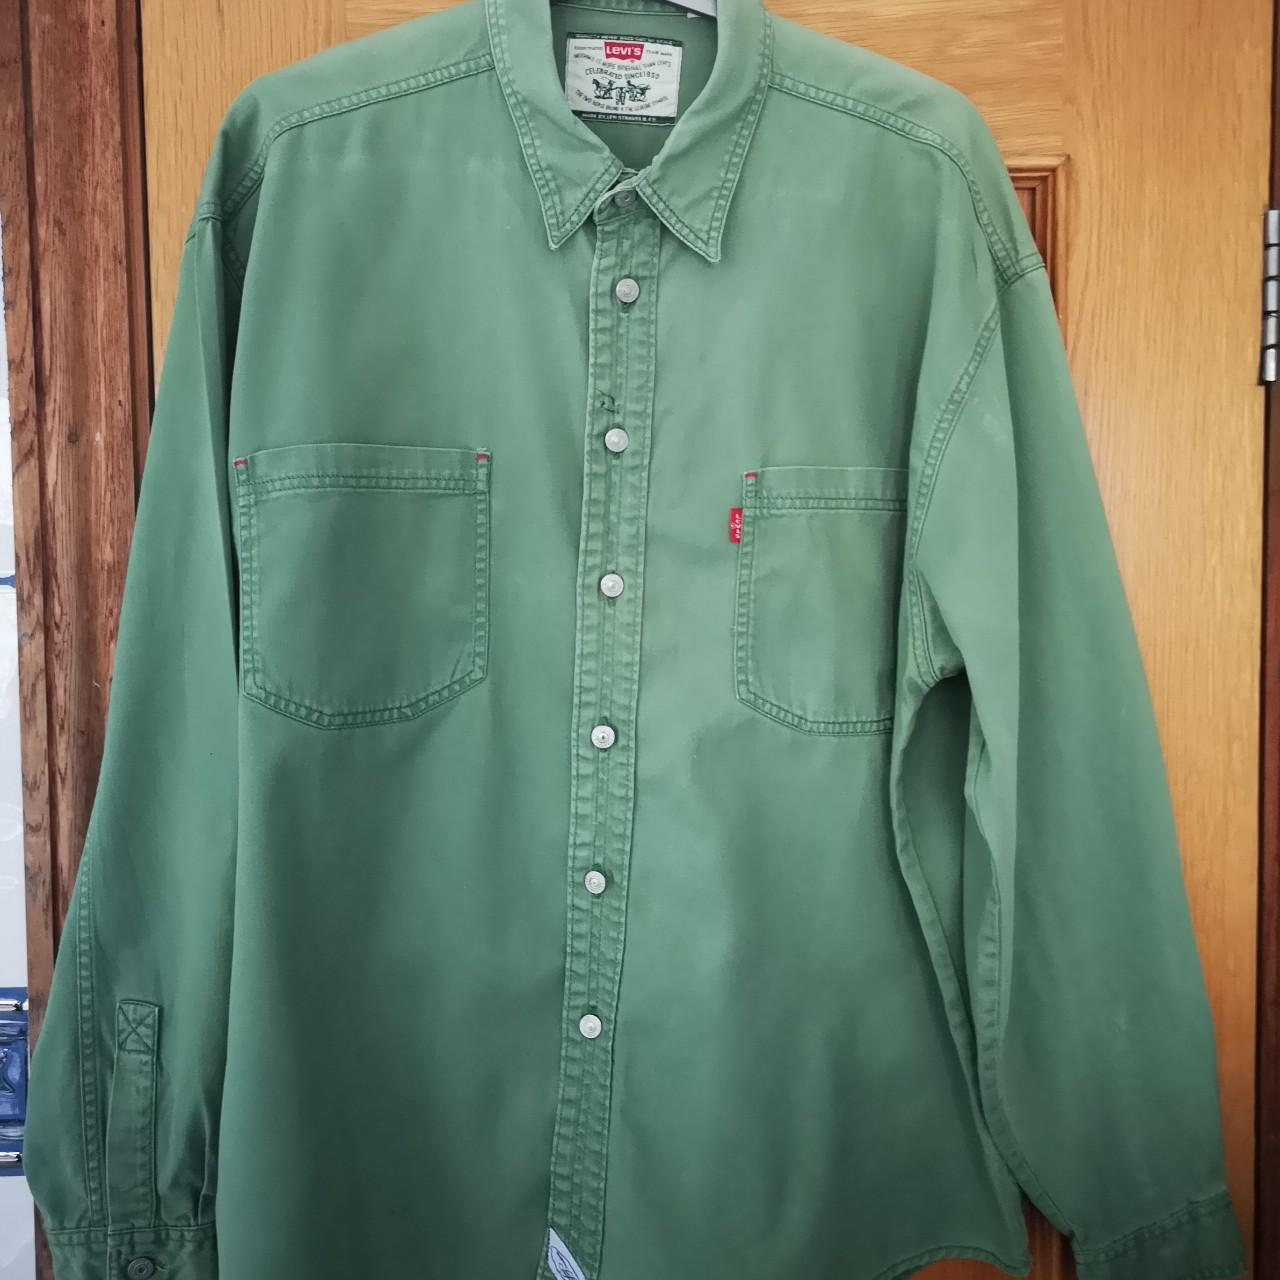 Vintage Green Levi Shirt Fabulous condition for... - Depop